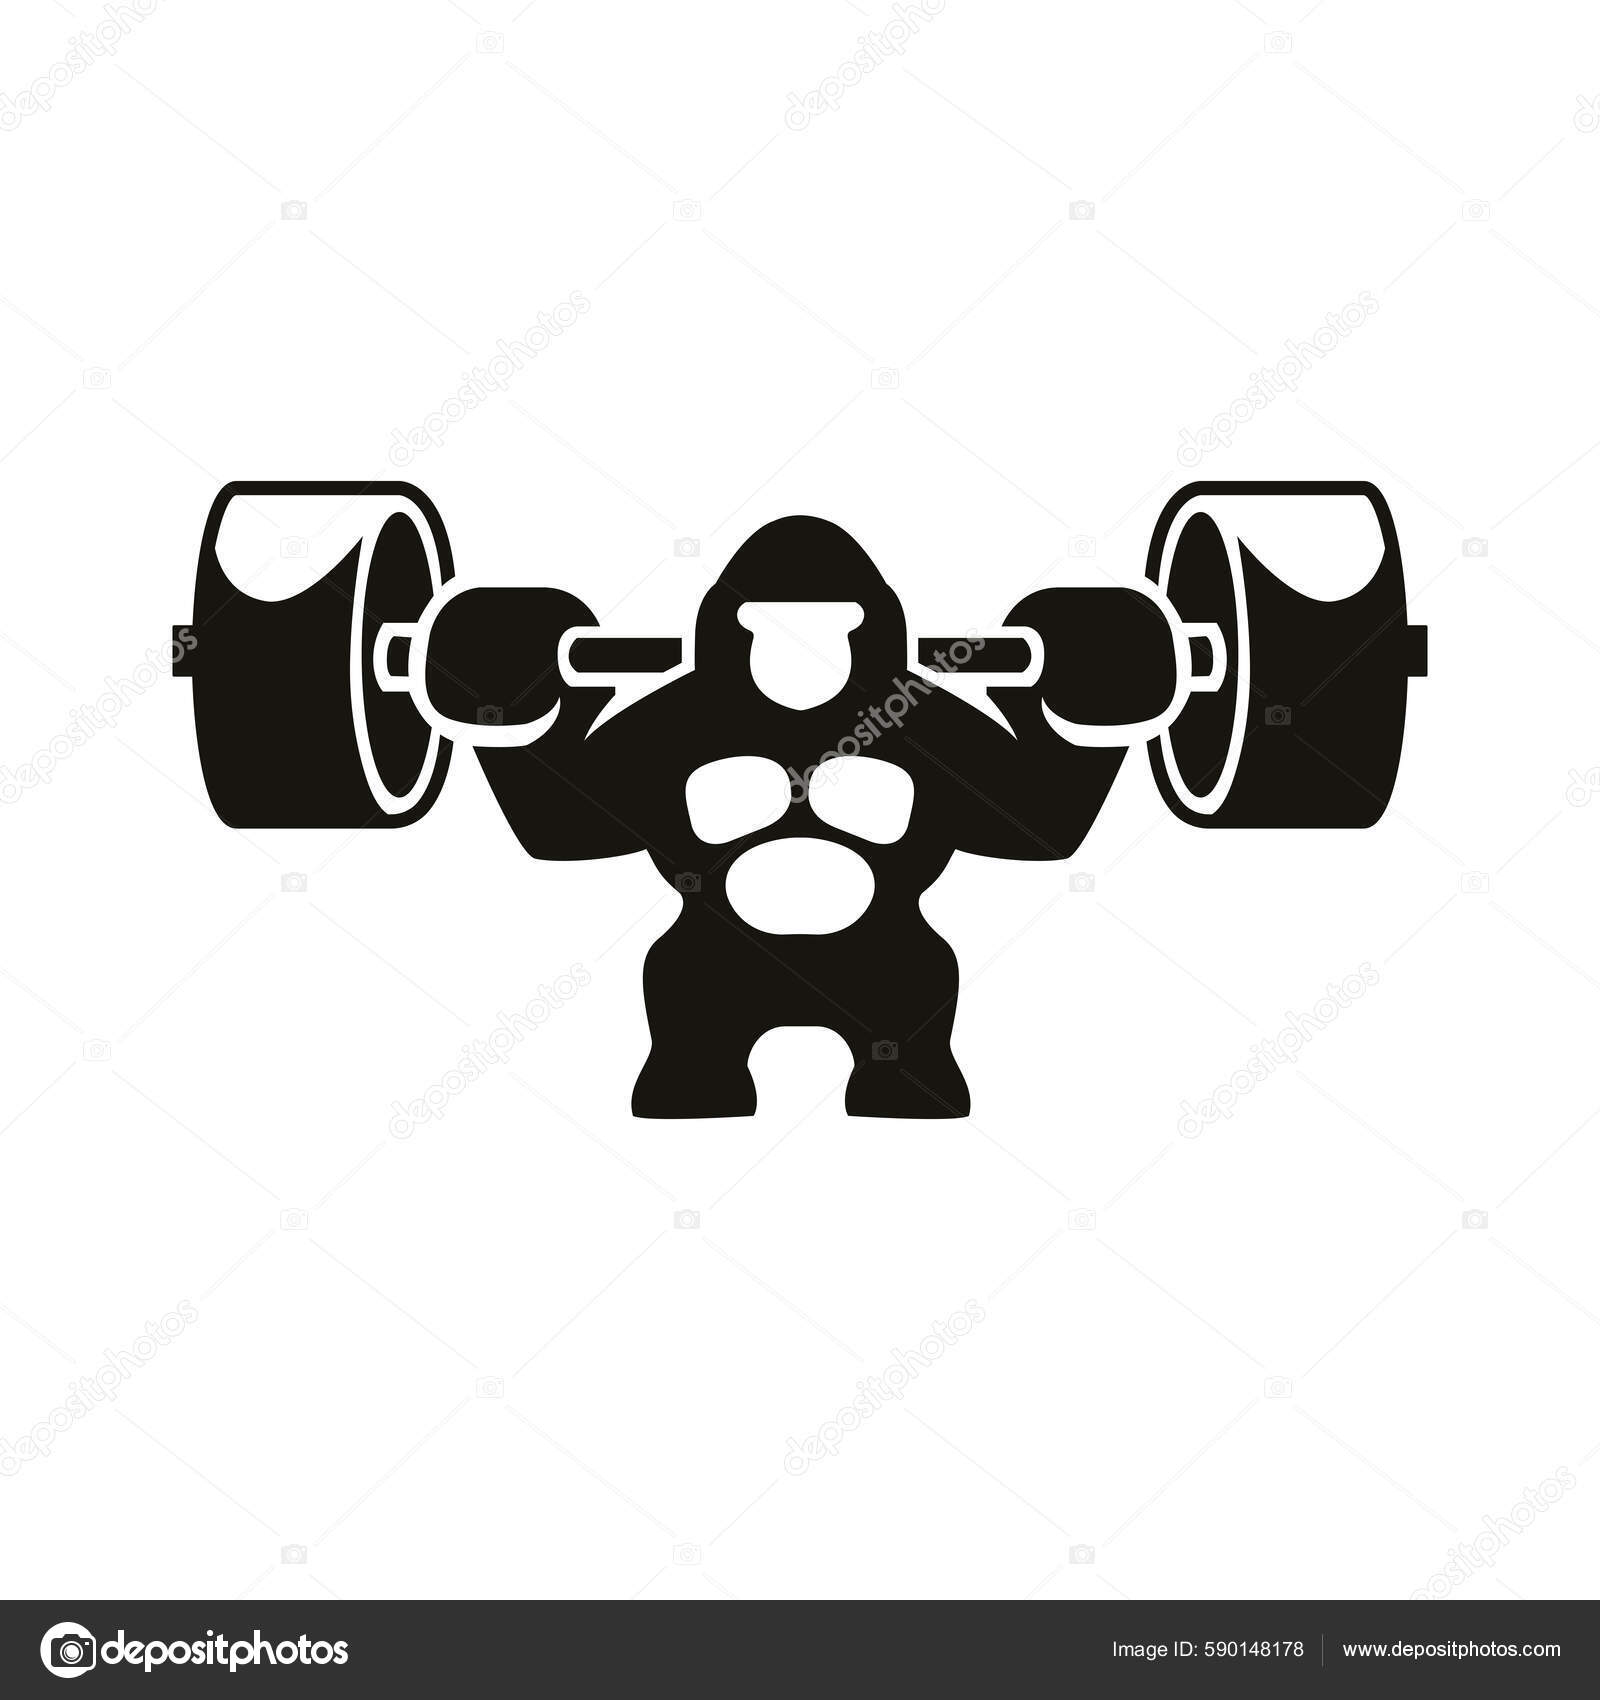 https://st.depositphotos.com/69827970/59014/v/1600/depositphotos_590148178-stock-illustration-gorilla-gym-logo-premium-vector.jpg